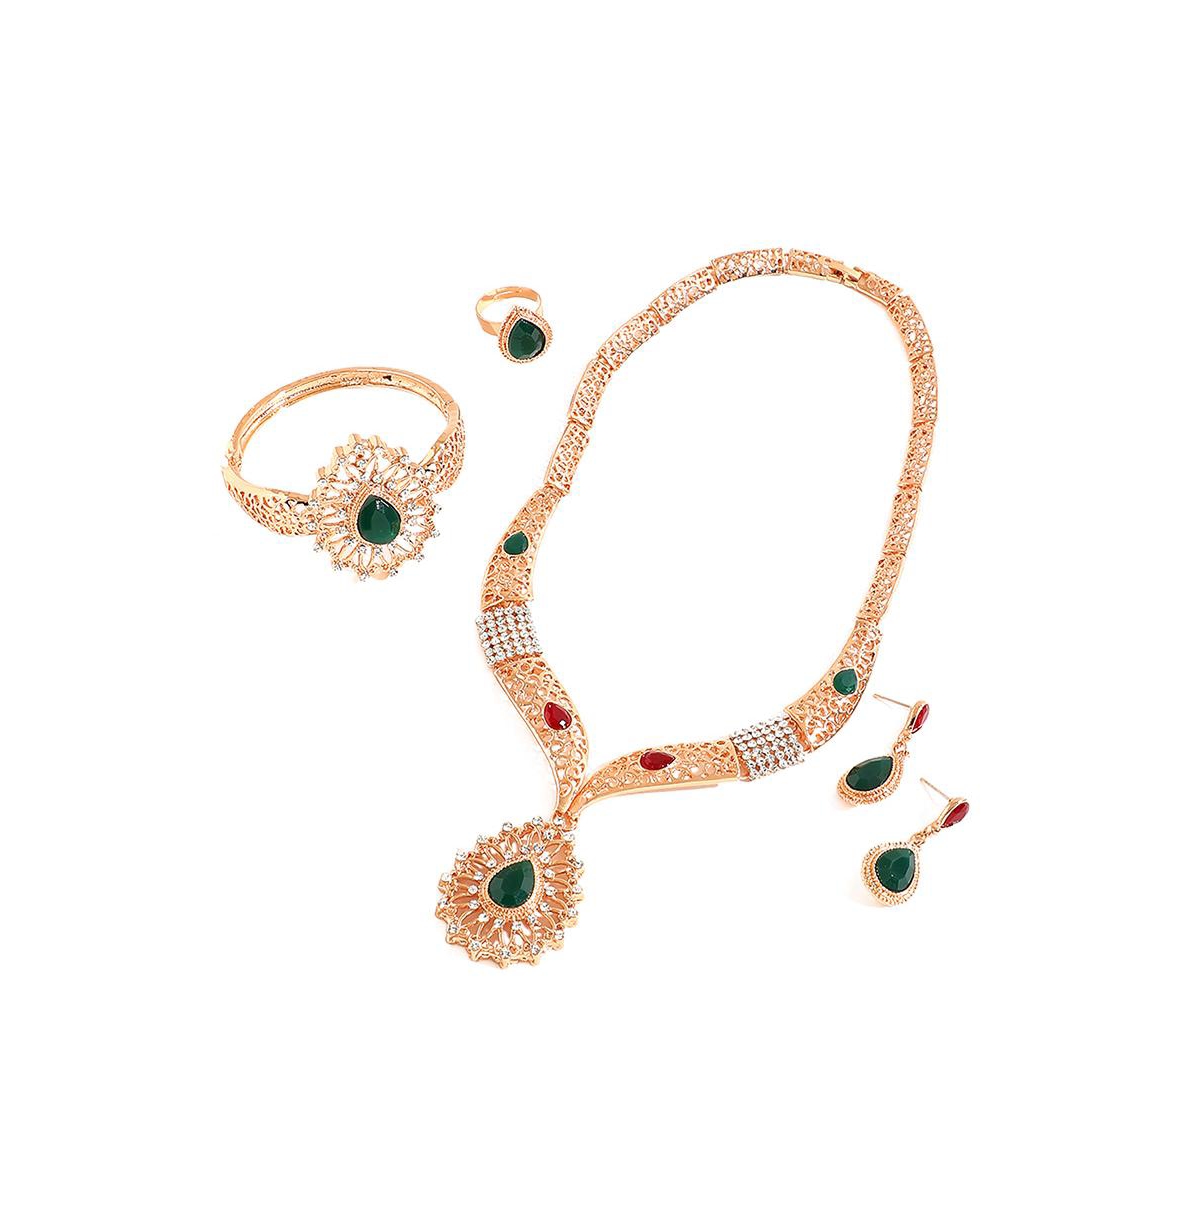 Women's Gold Teardrop Stone Necklace, Earrings, Bracelet And Ring (Set Of 4) - Gold